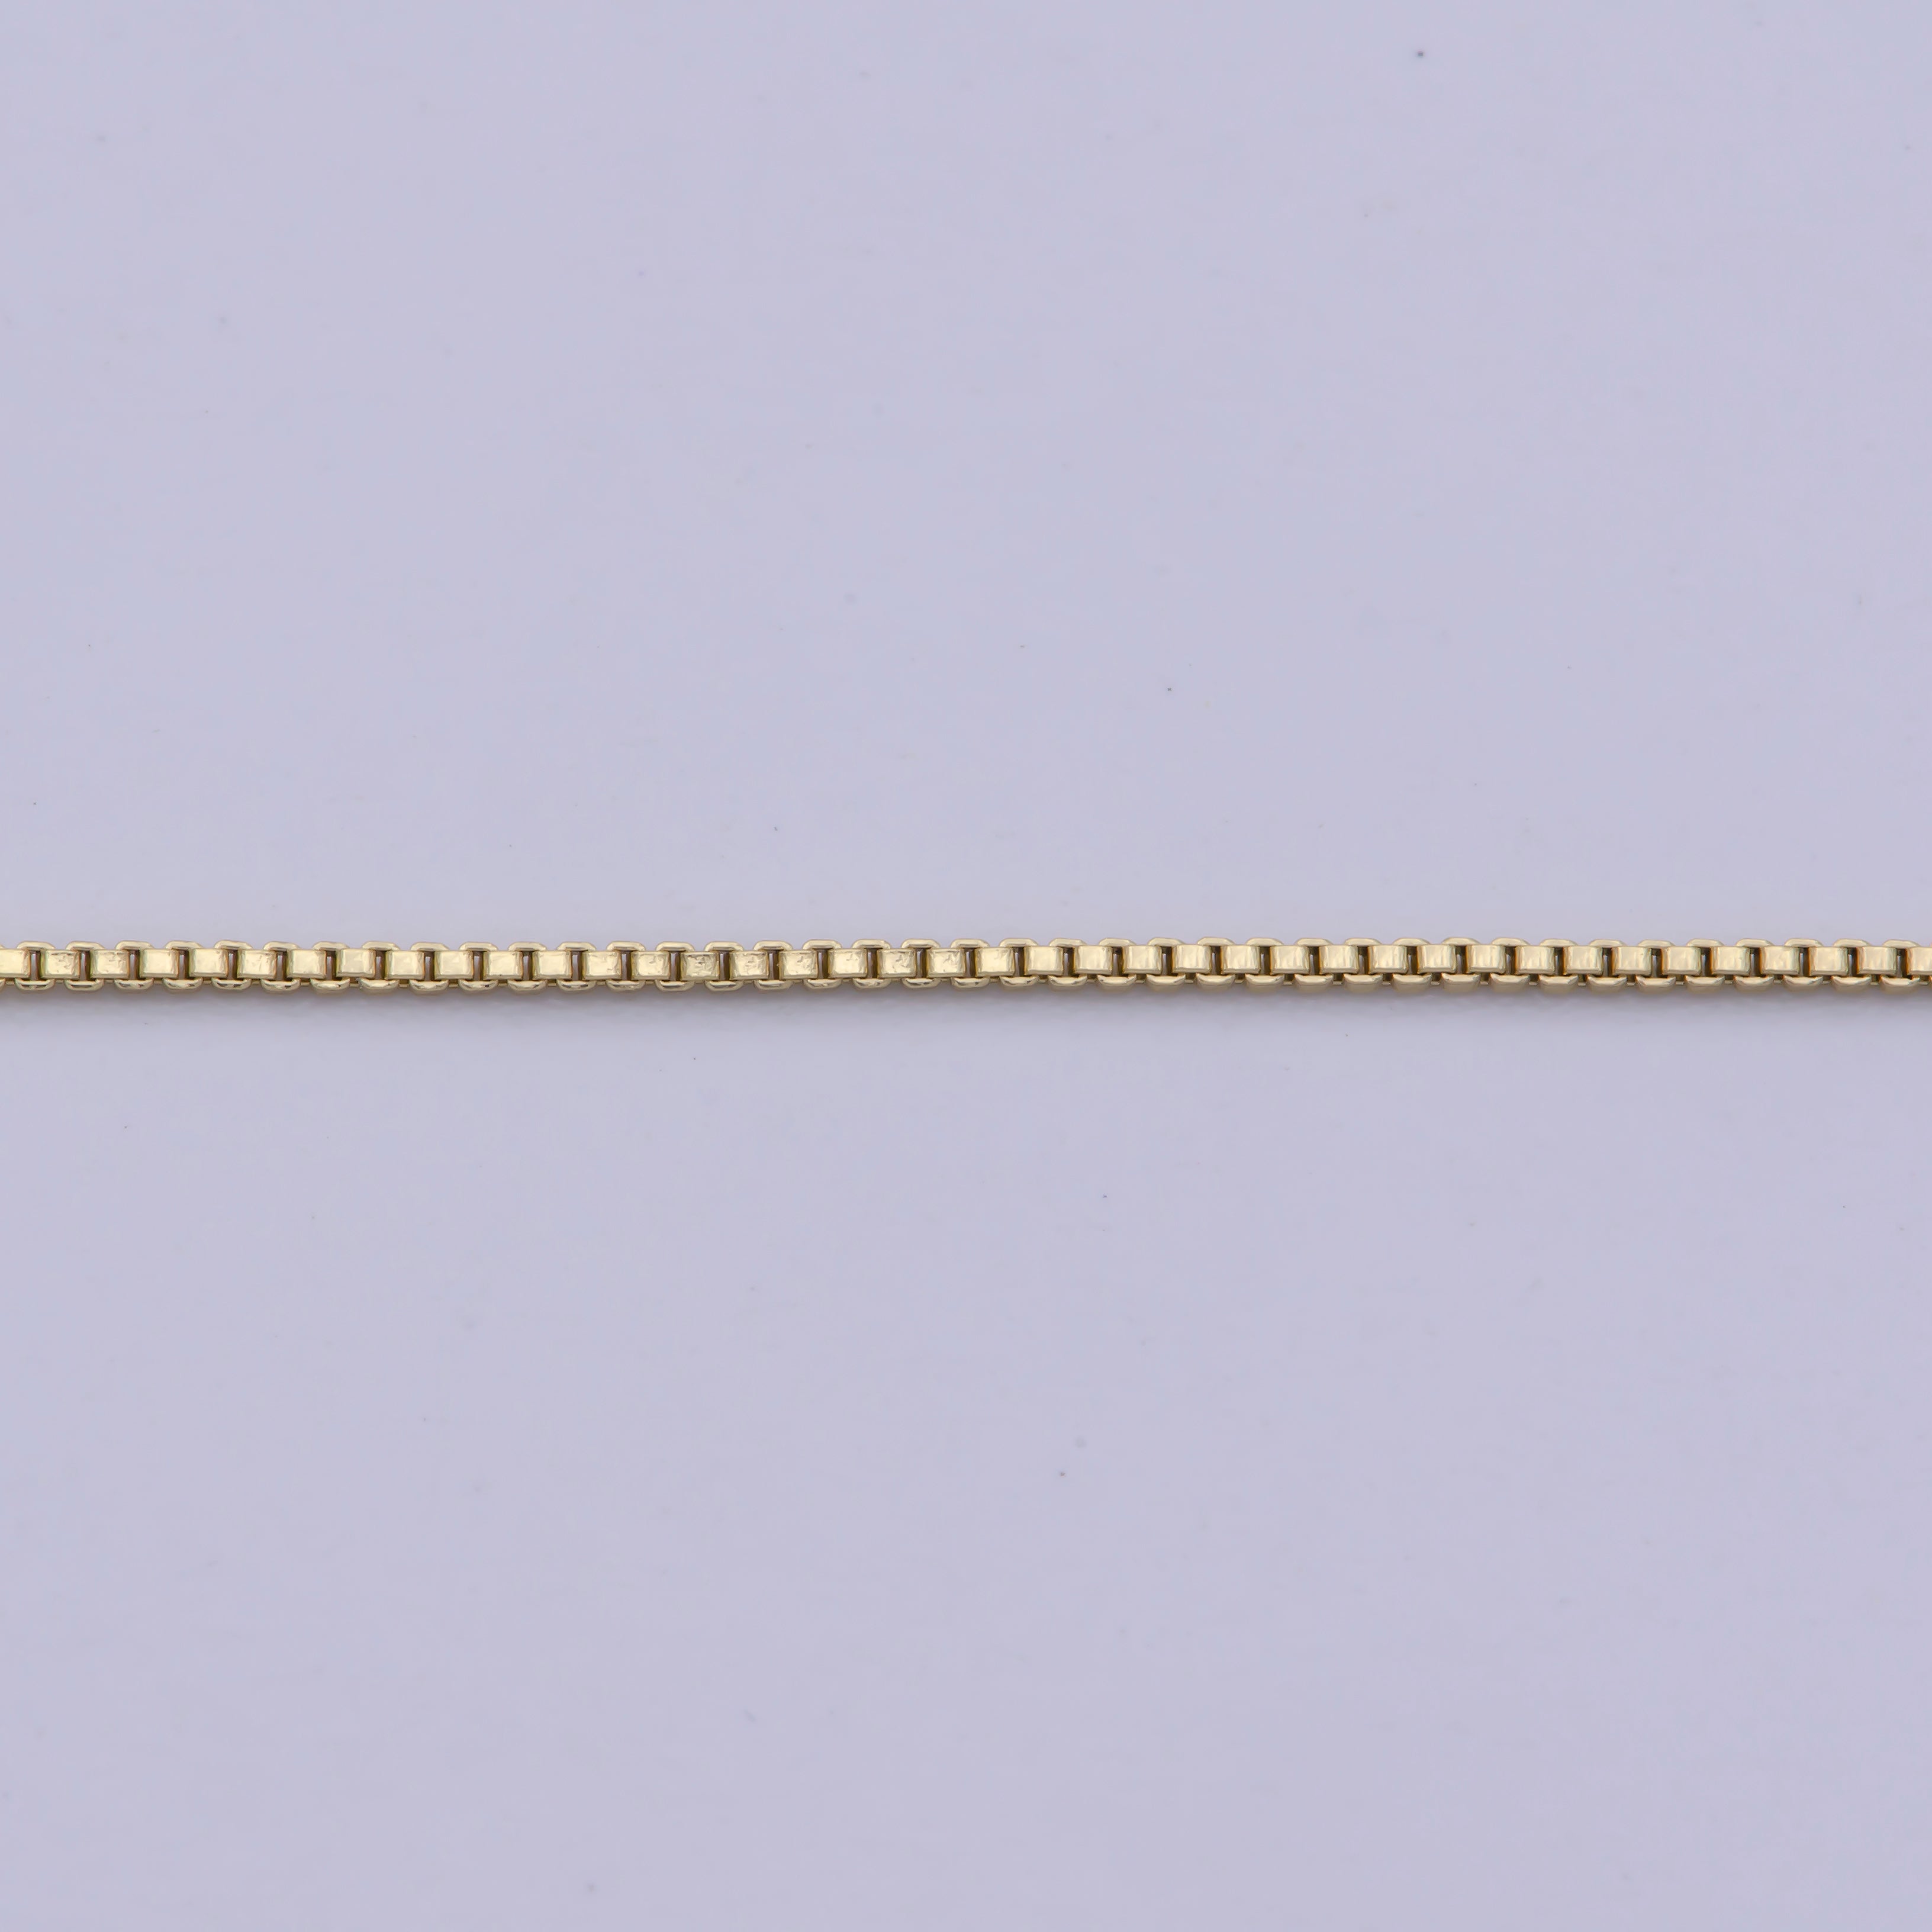 Fine Box Chain Necklace 14k Gold Filled Box Finished Chain, 0.6mm Box Necklace 18 inch long Necklace - DLUXCA